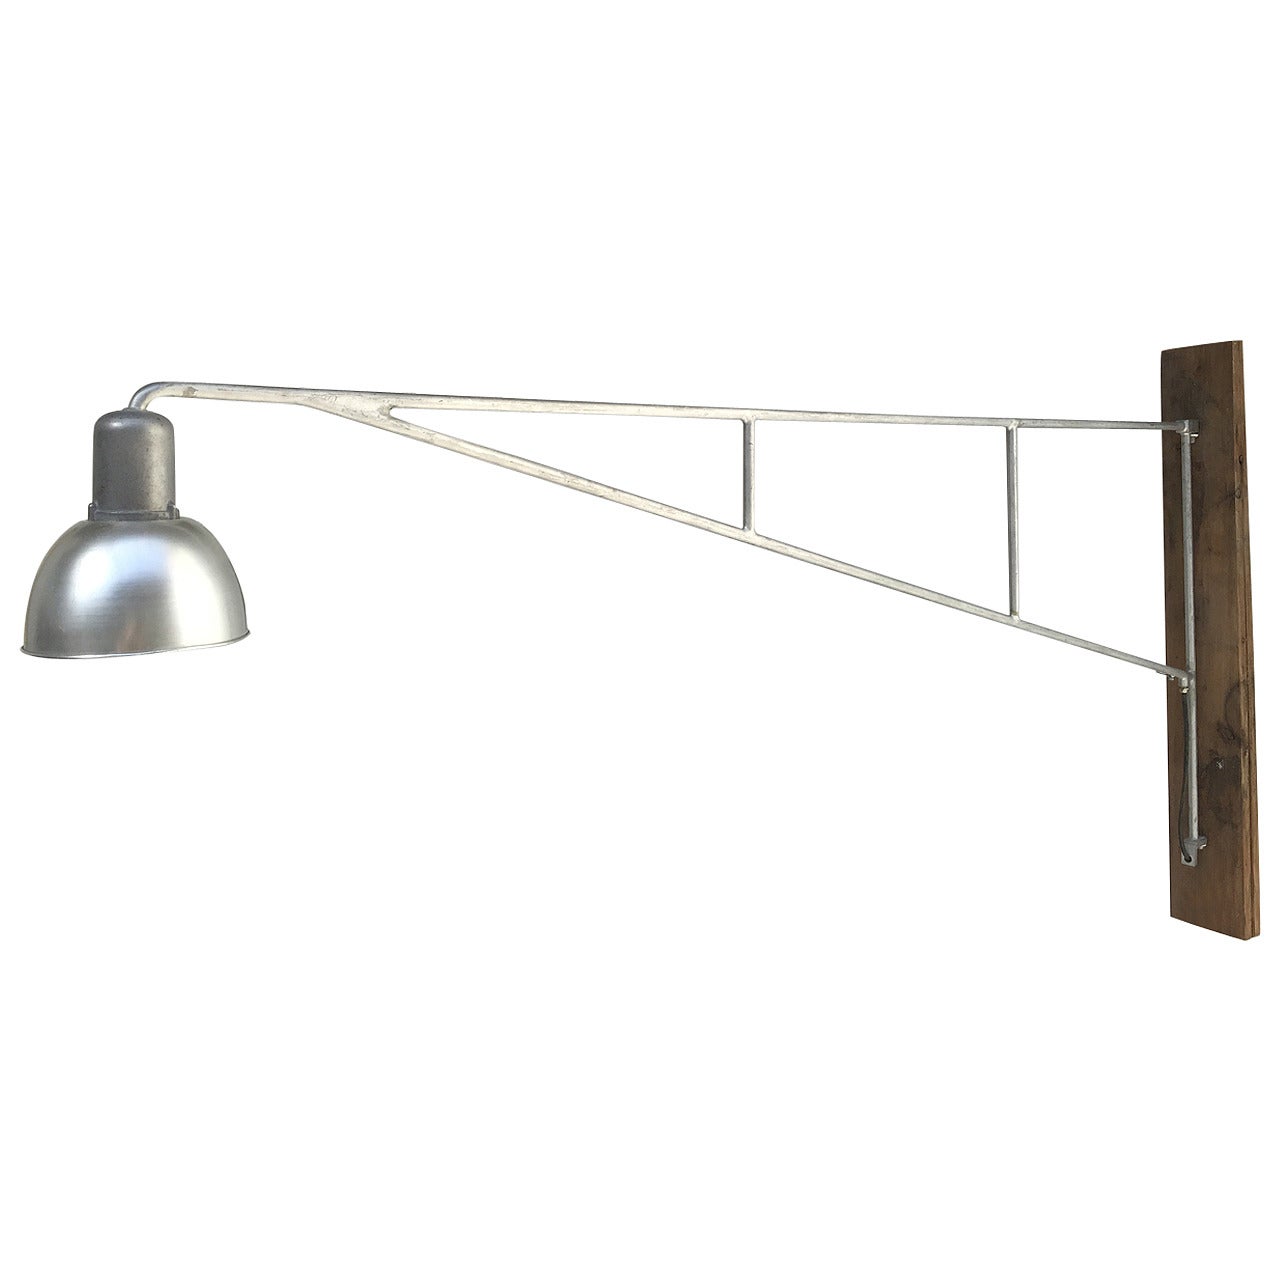 Stunning Large Swiss Industrial Alumag Belmag Swing Jib Lamp For Sale